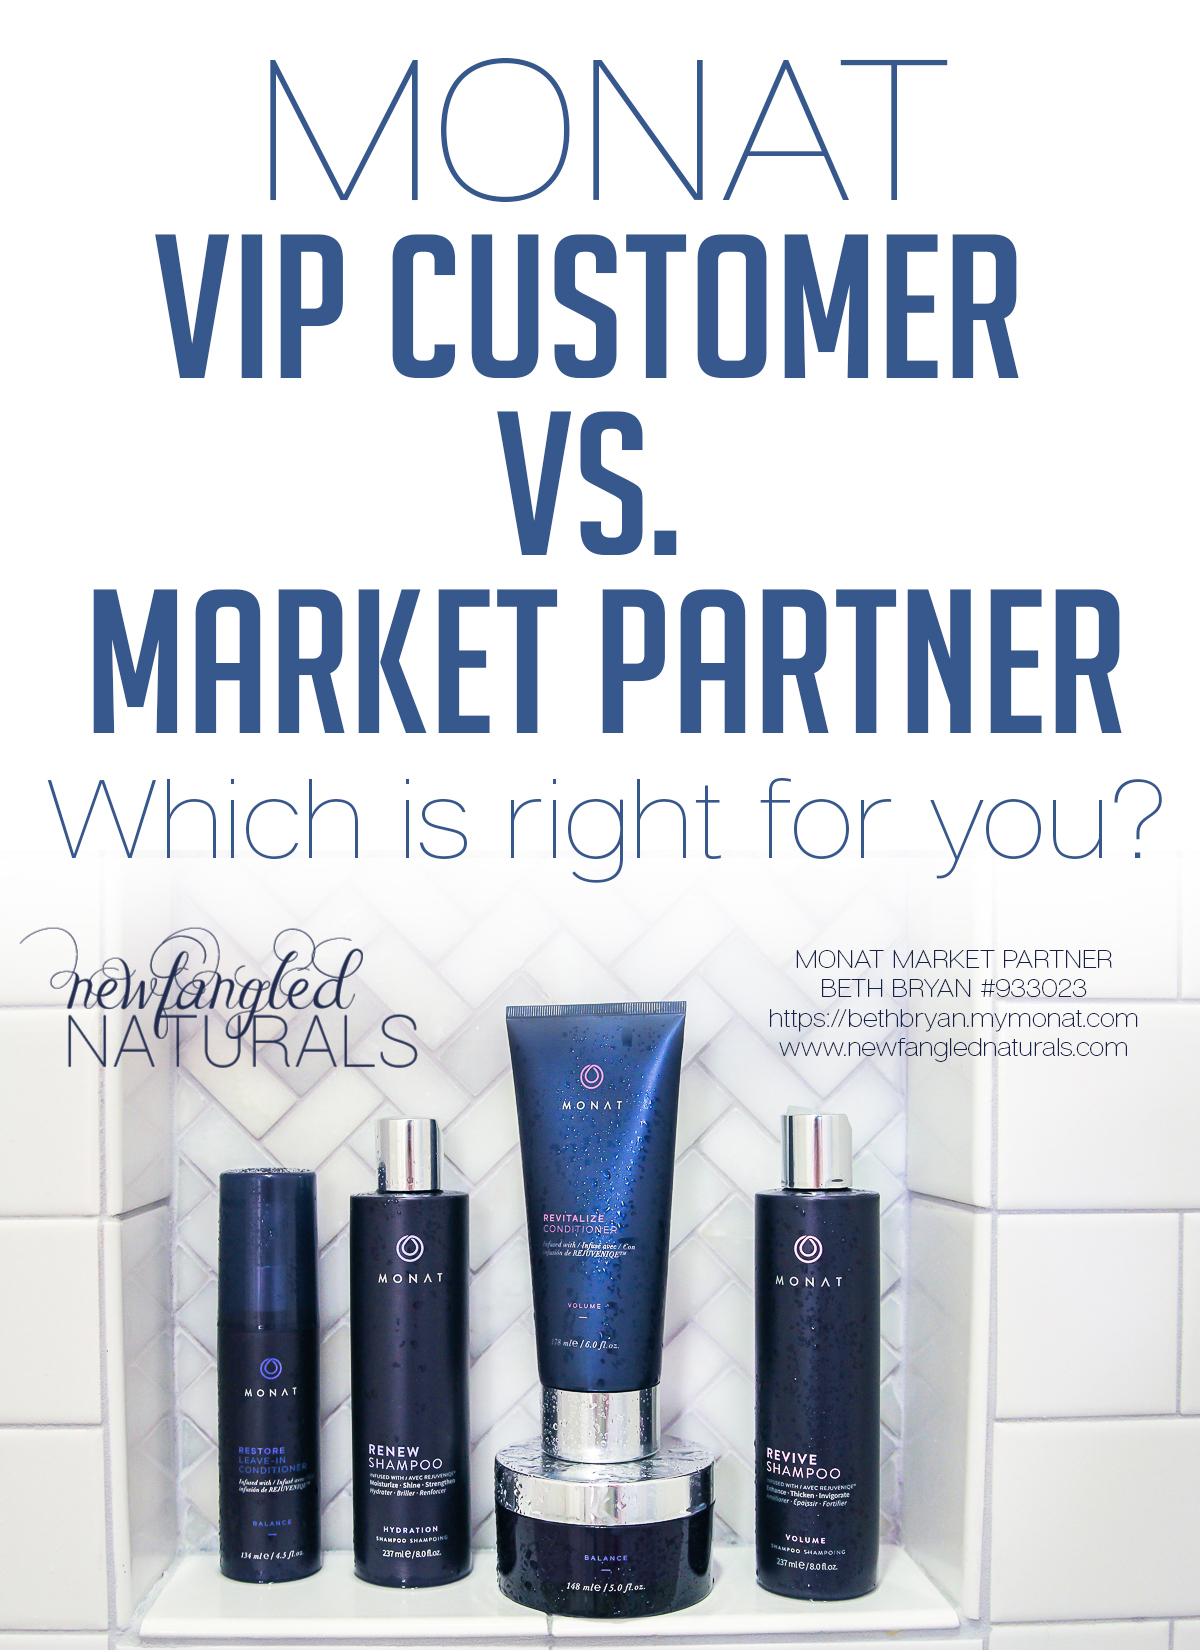 MONAT VIPs vs Market Partner